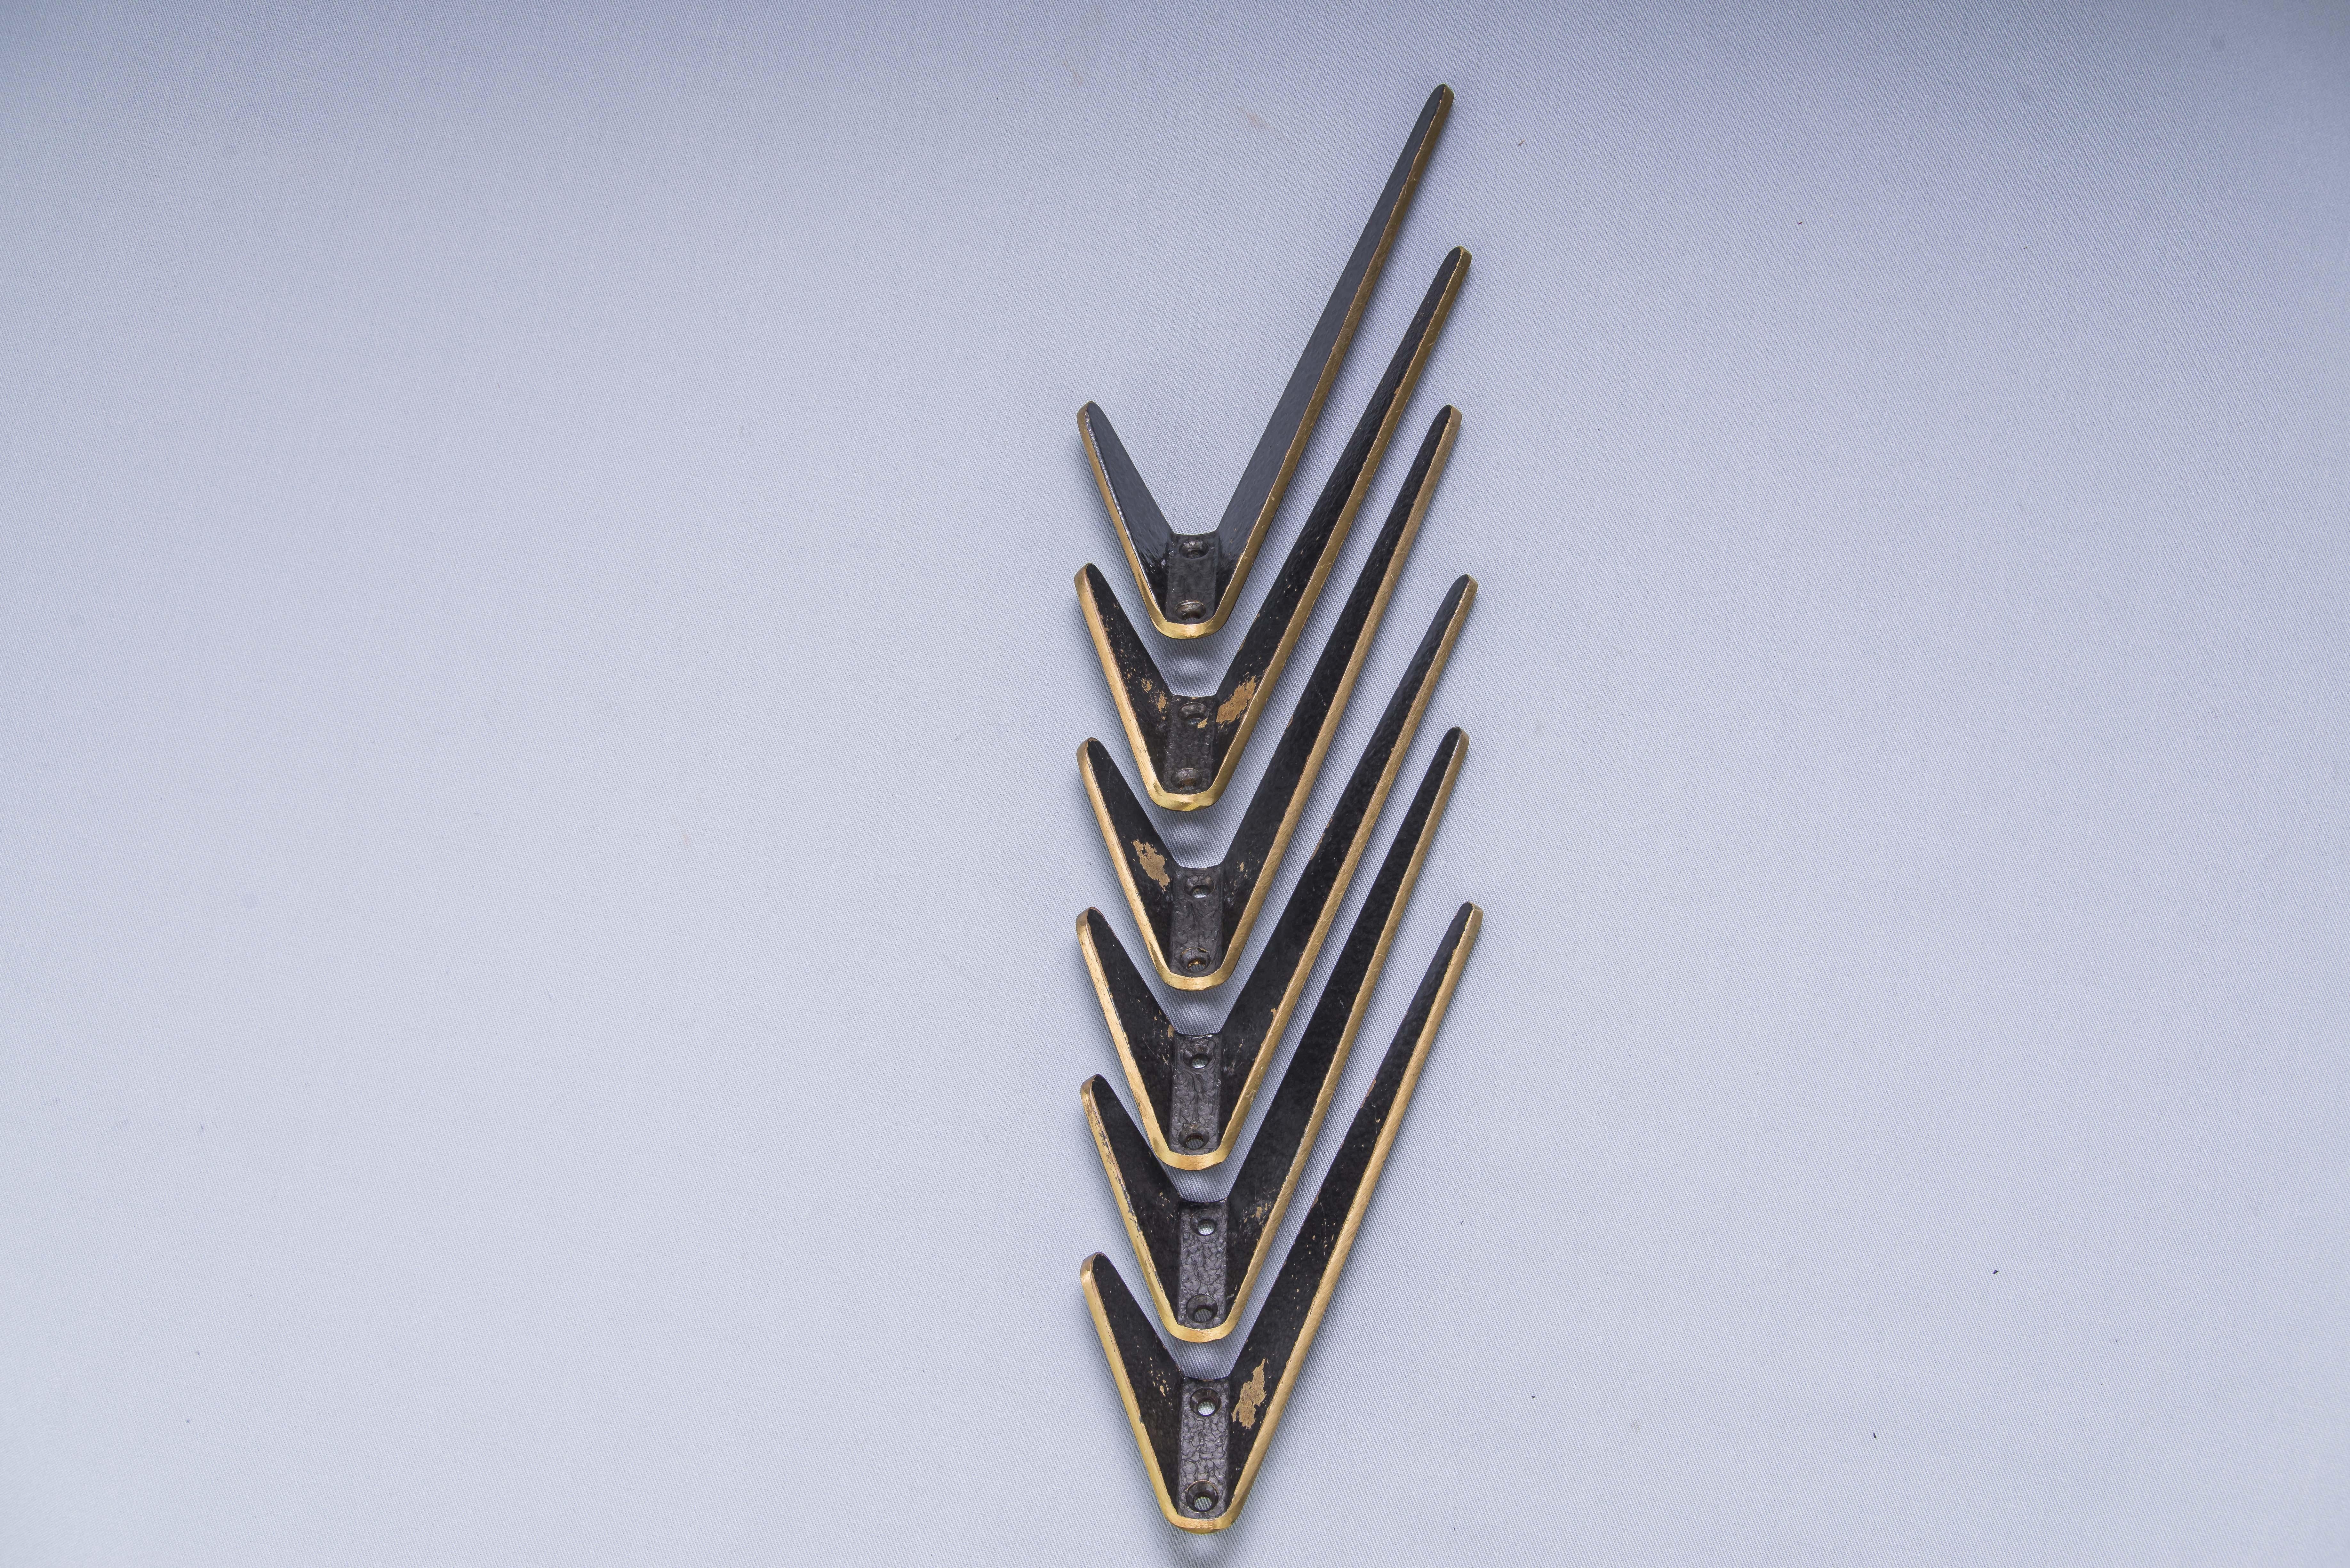 Six asymmetric wall hooks by Hertha Baller Austria, 1950s
Original condition.
Price and sale per piece.